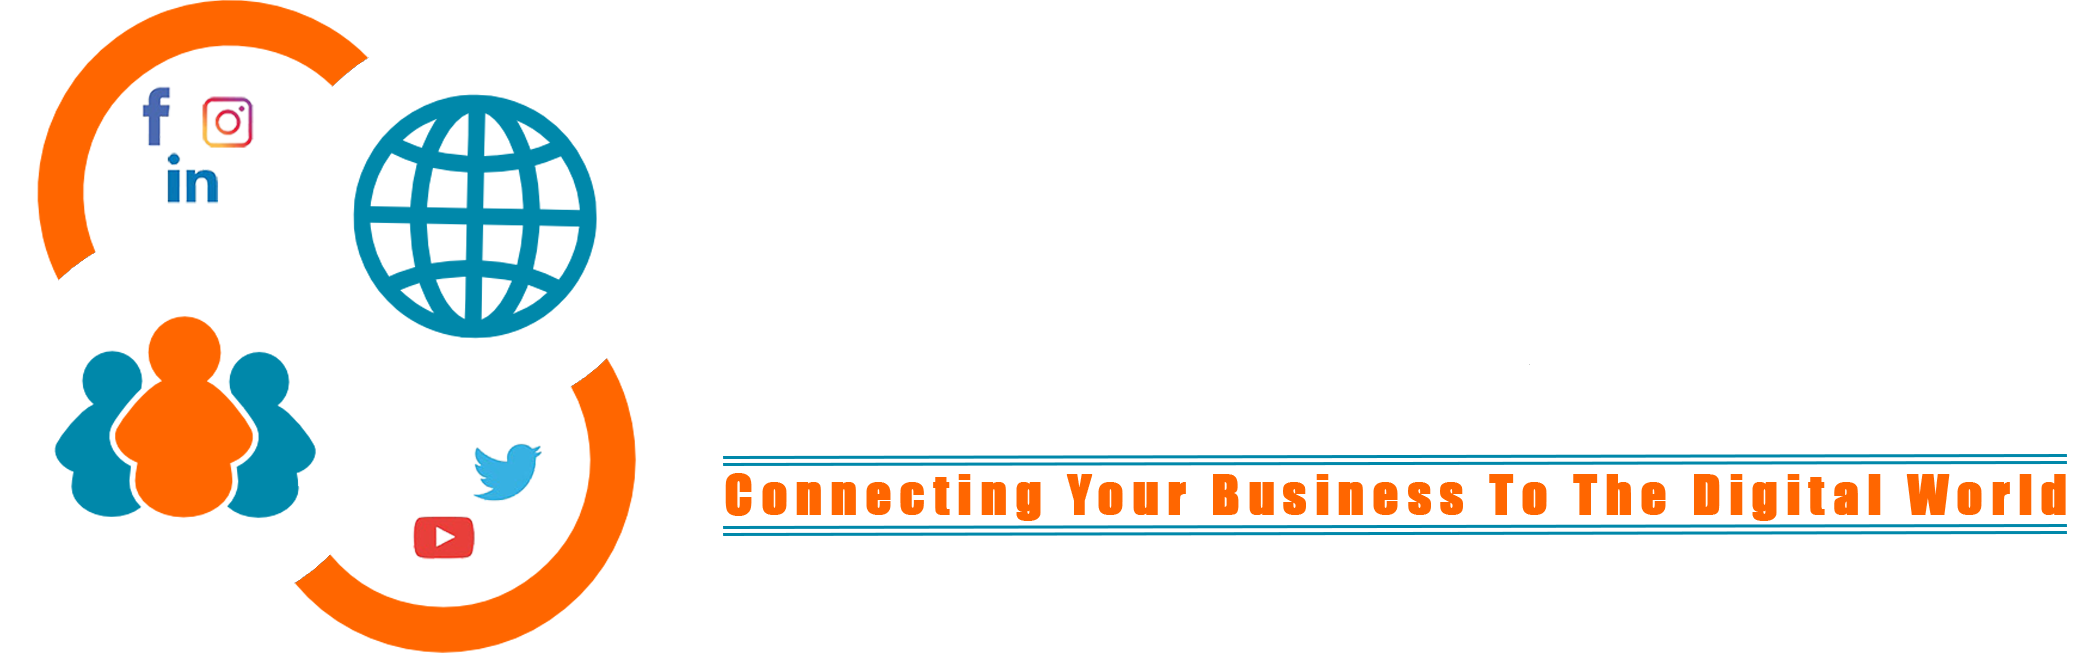 rr digital life online marketing logo